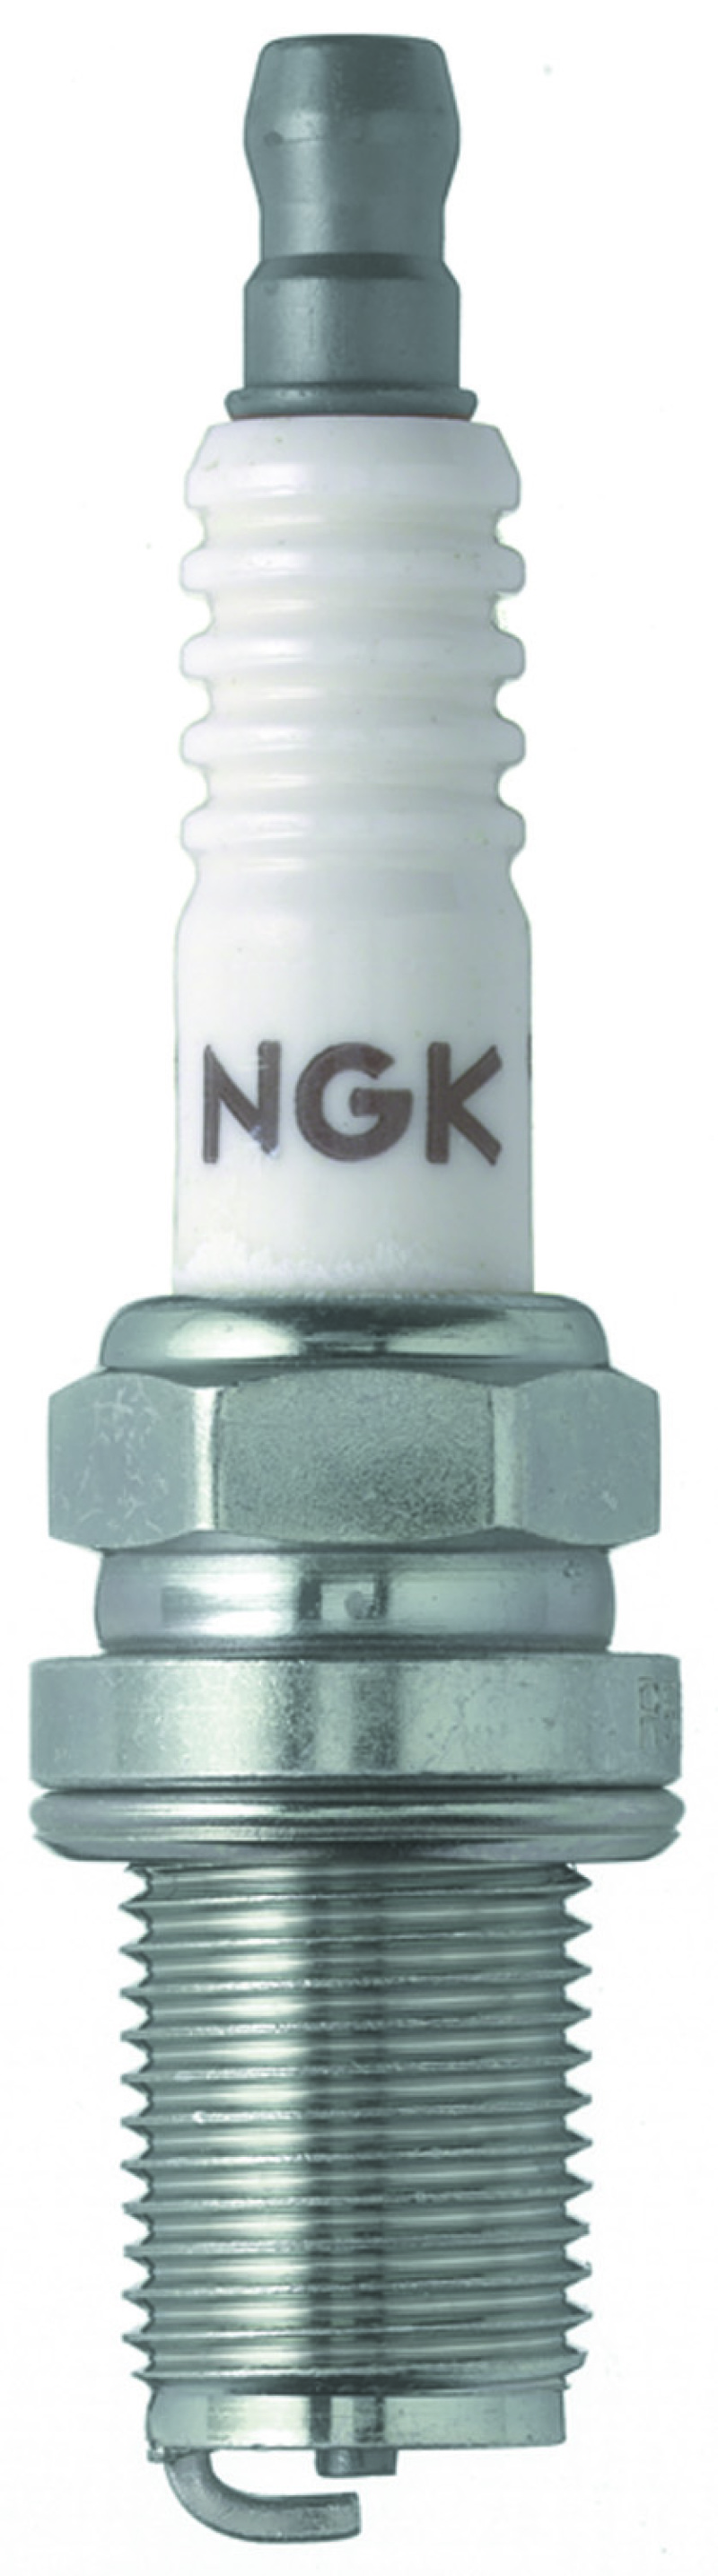 NGK Nickel Spark Plug Box of 4 (R5671A-10) - 5820